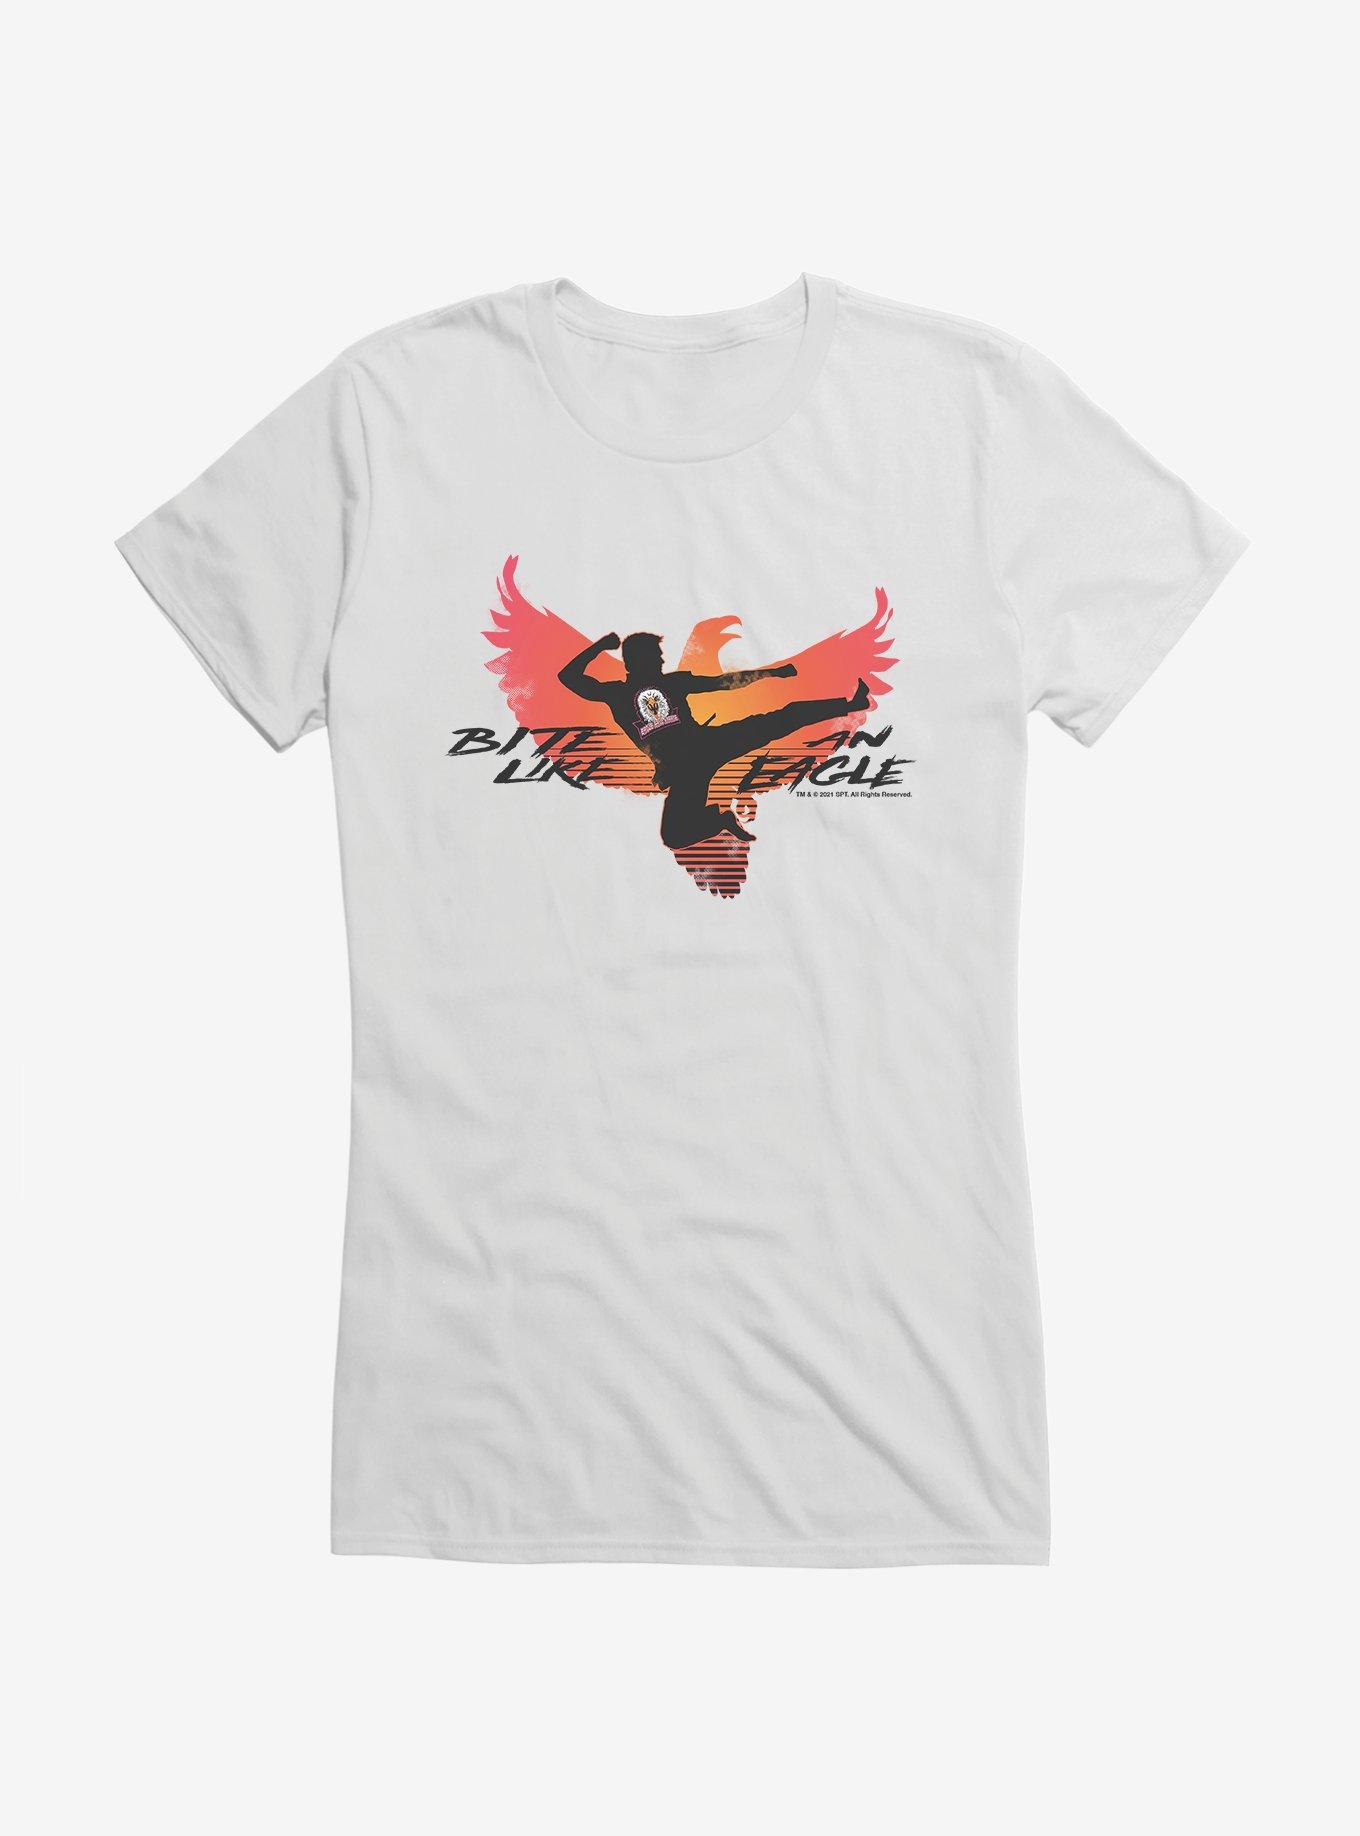 Cobra Kai Eagle Wings Girls T-Shirt, , hi-res